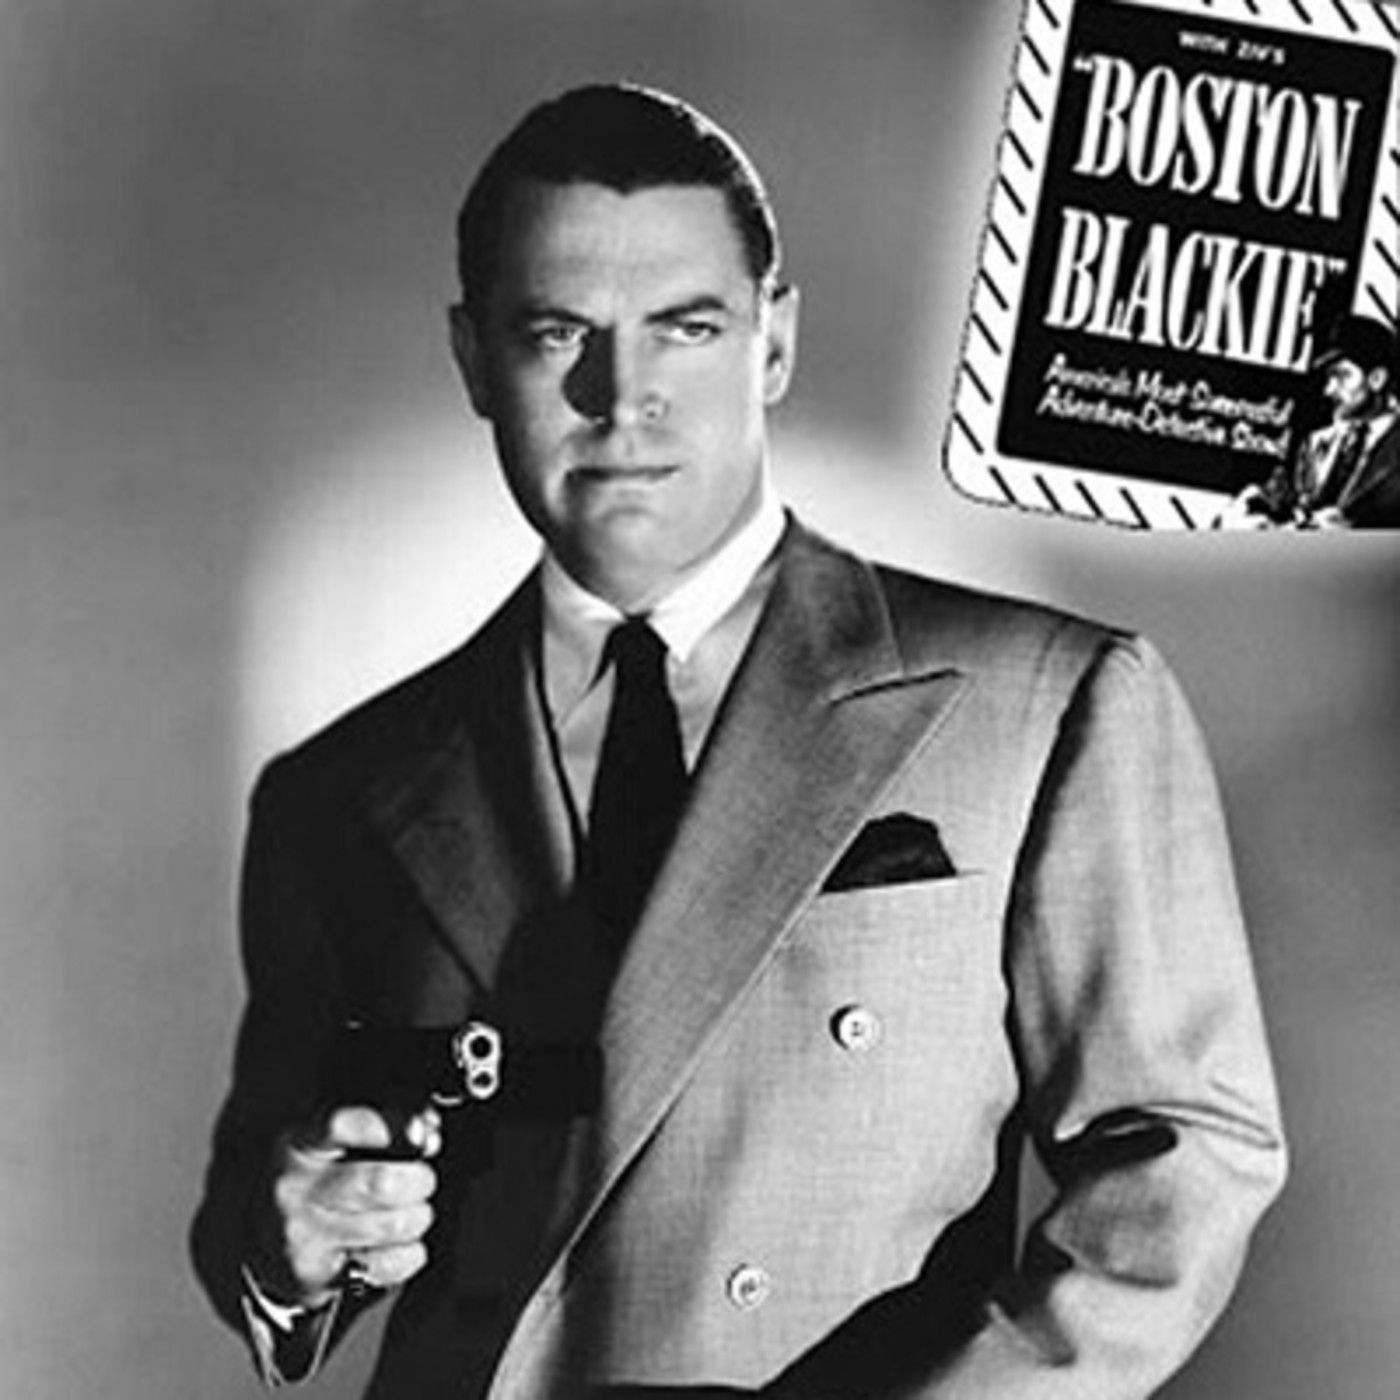 Boston Blackie - Framed By A Film - 146